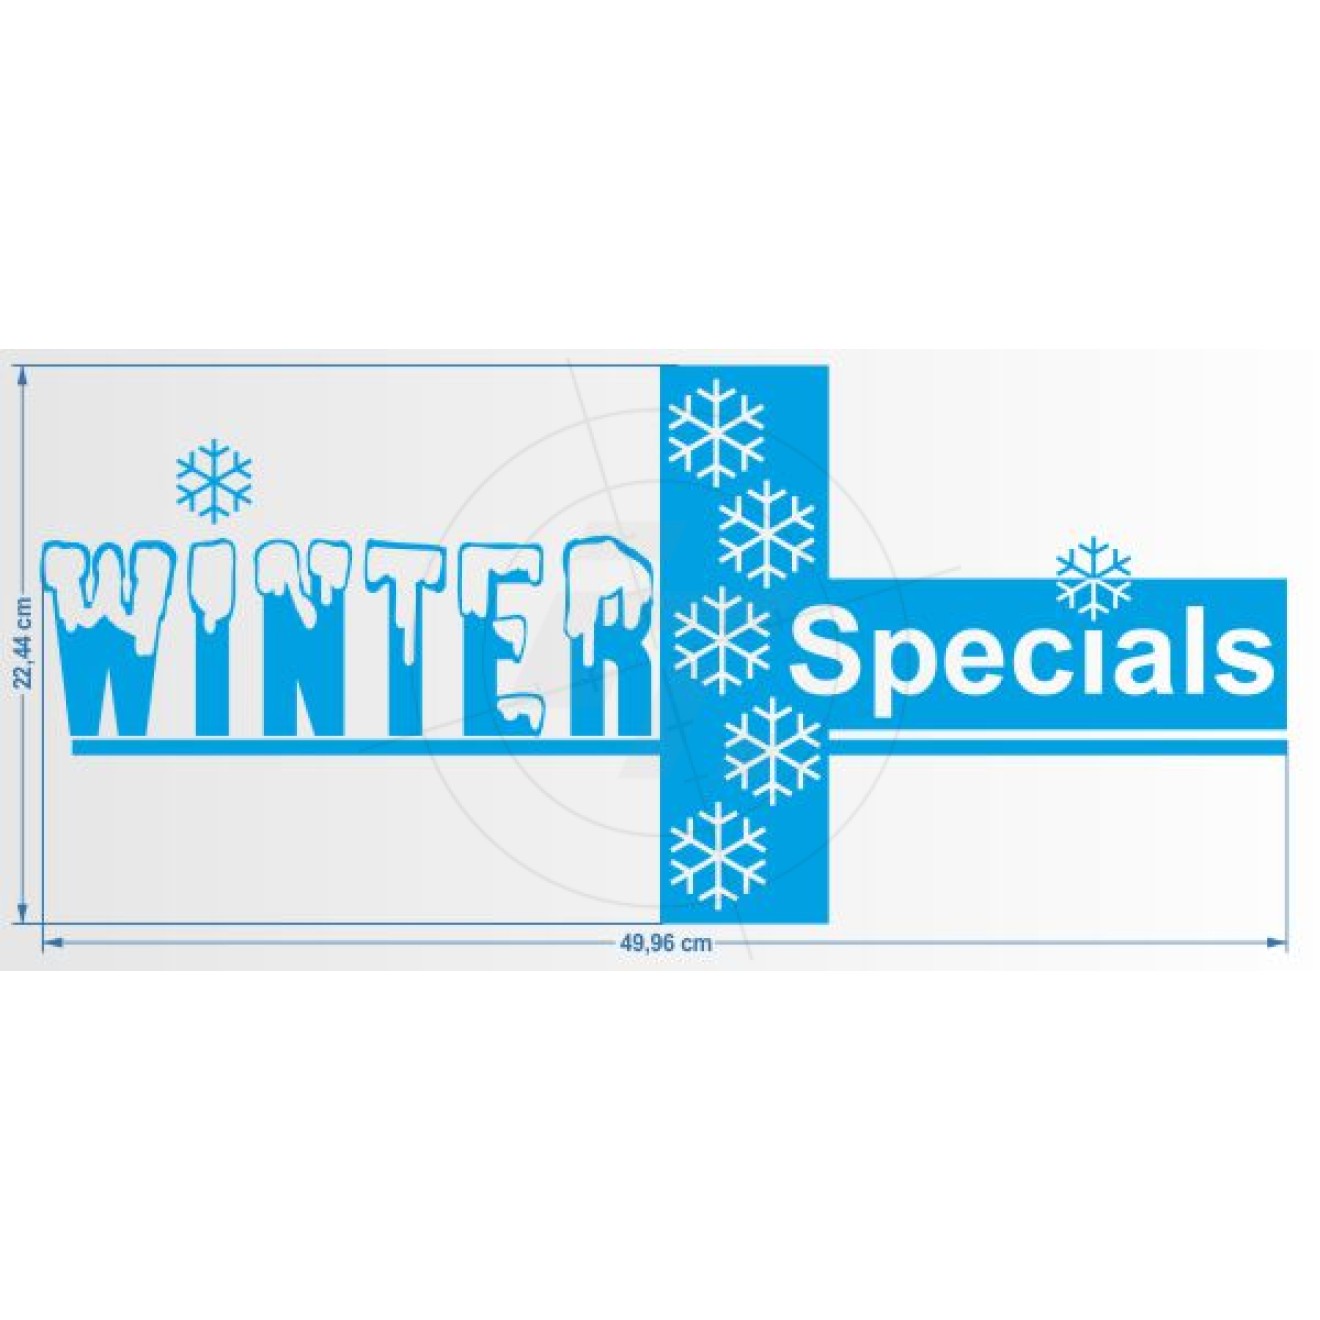 Winter specials, Banner Landscape